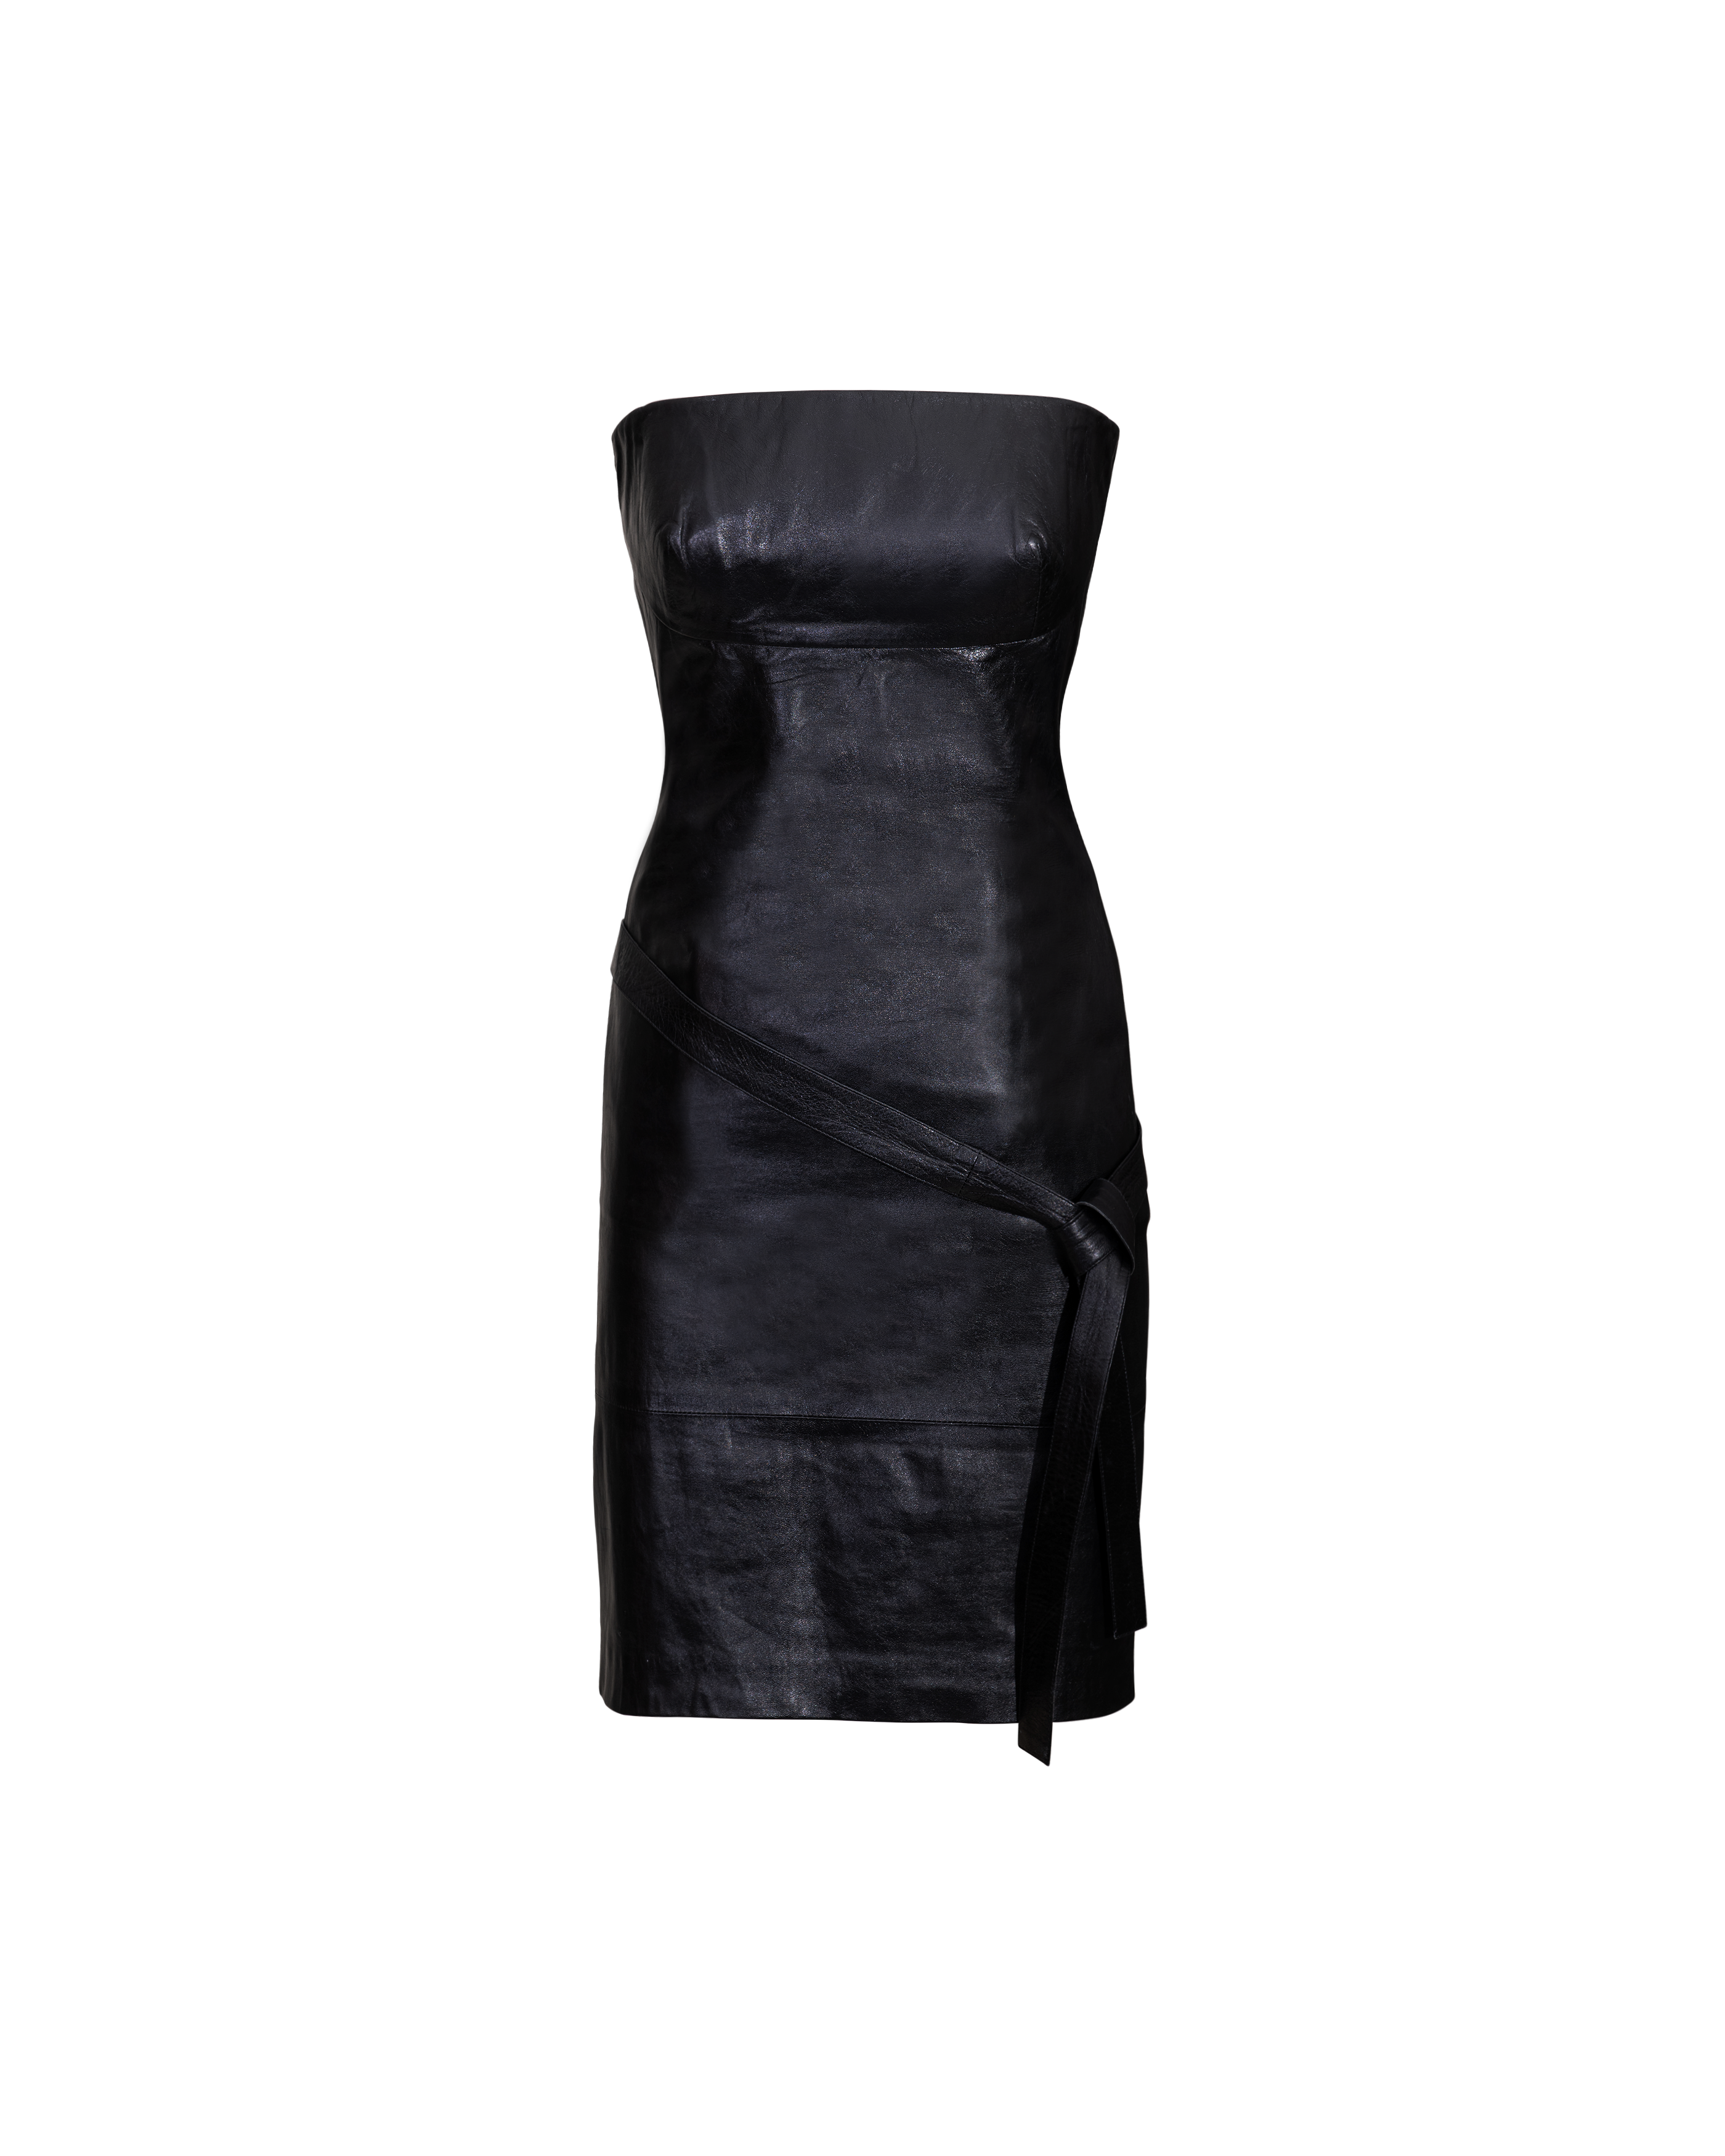 S/S 2001 Black Leather Strapless Mini Dress